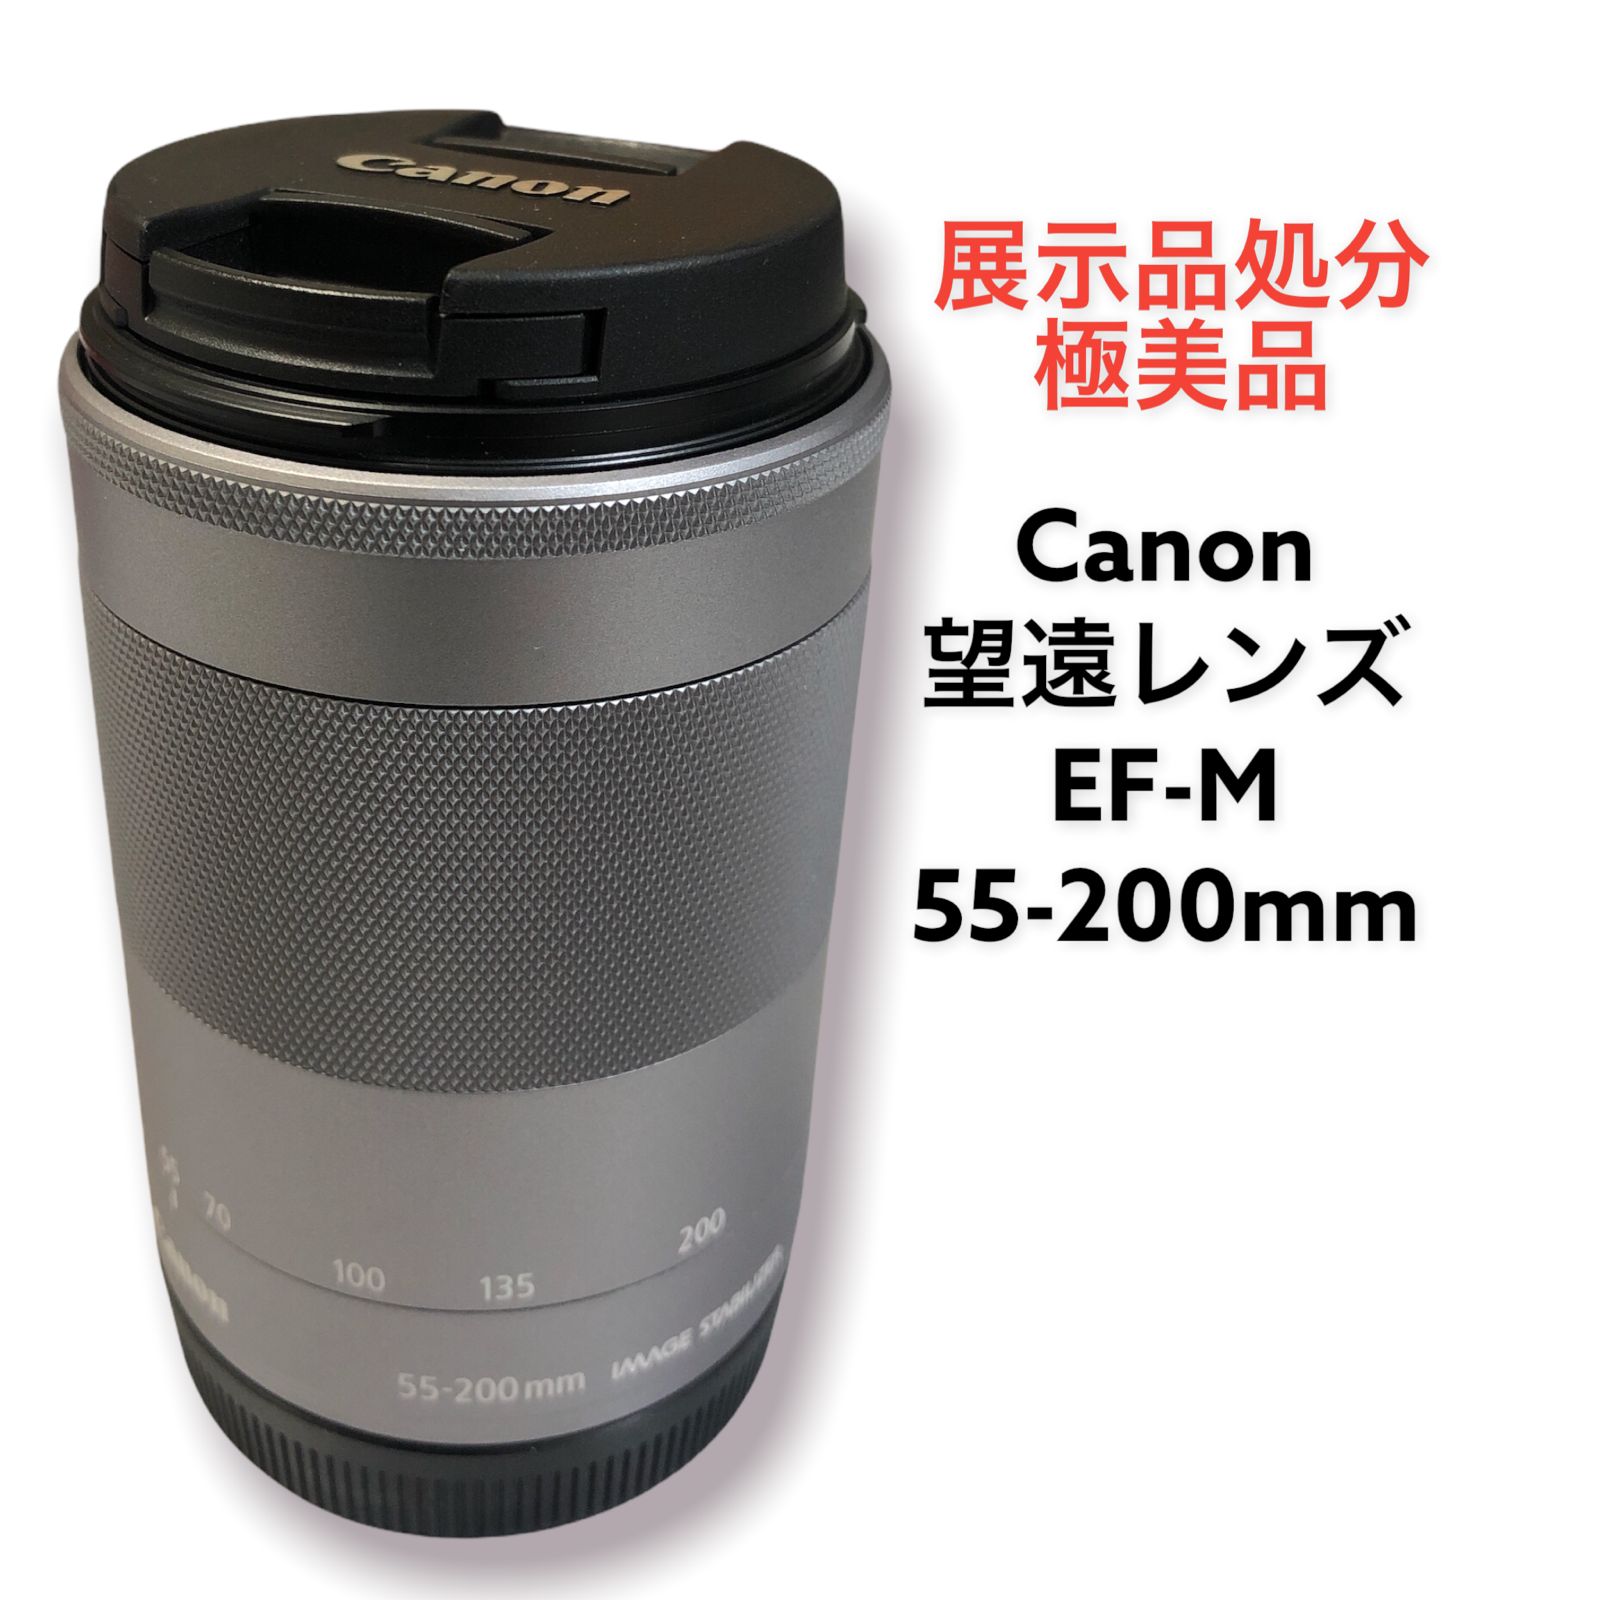 Canon EF-M 55-200mm望遠レンズ - TENTKO - メルカリ